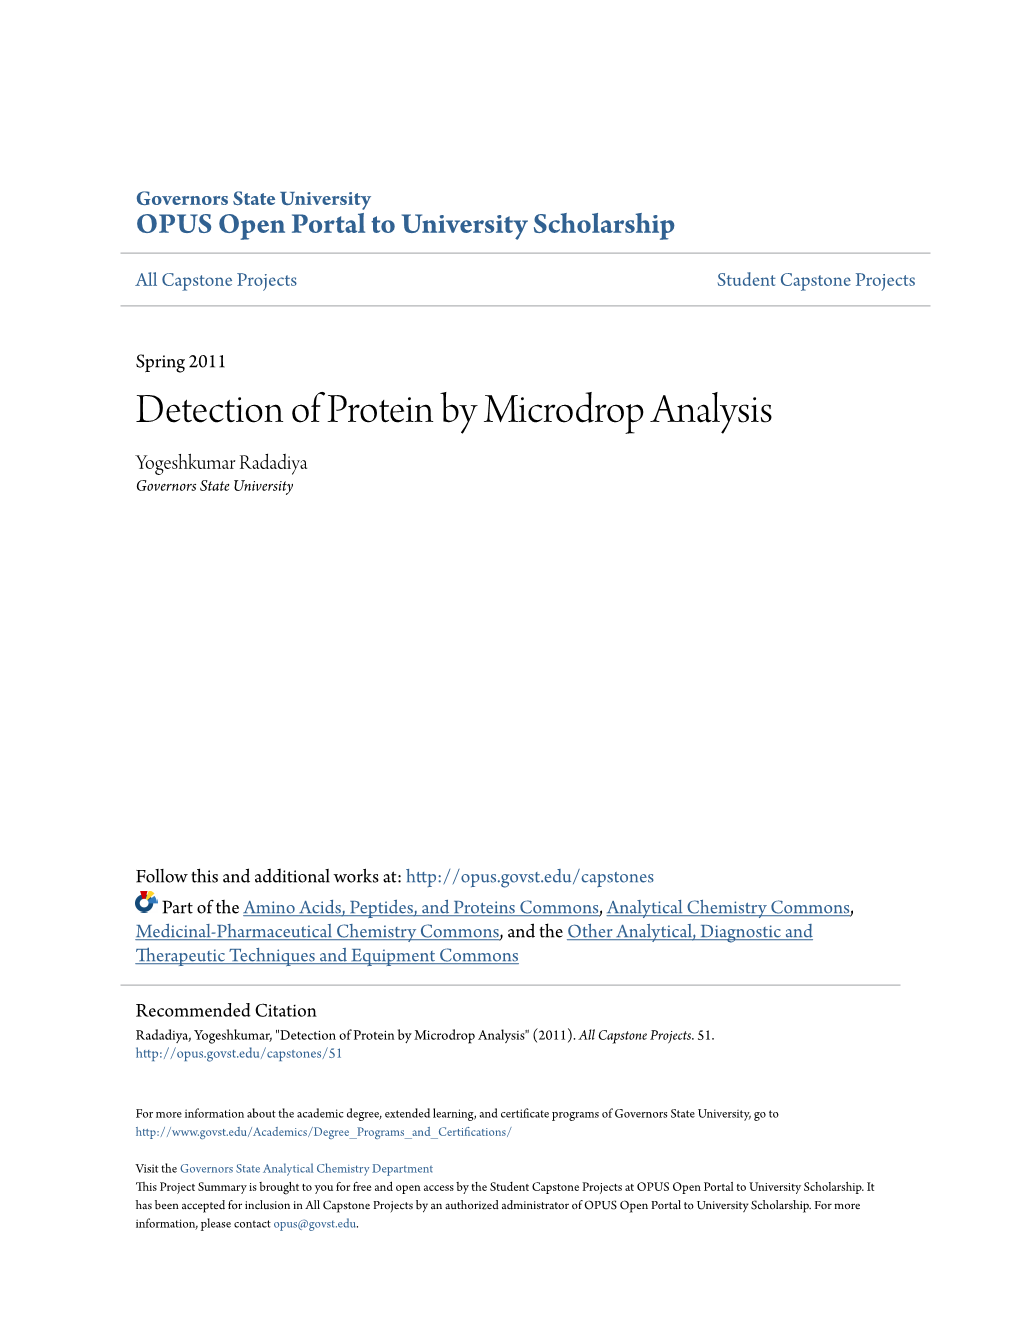 Detection of Protein by Microdrop Analysis Yogeshkumar Radadiya Governors State University